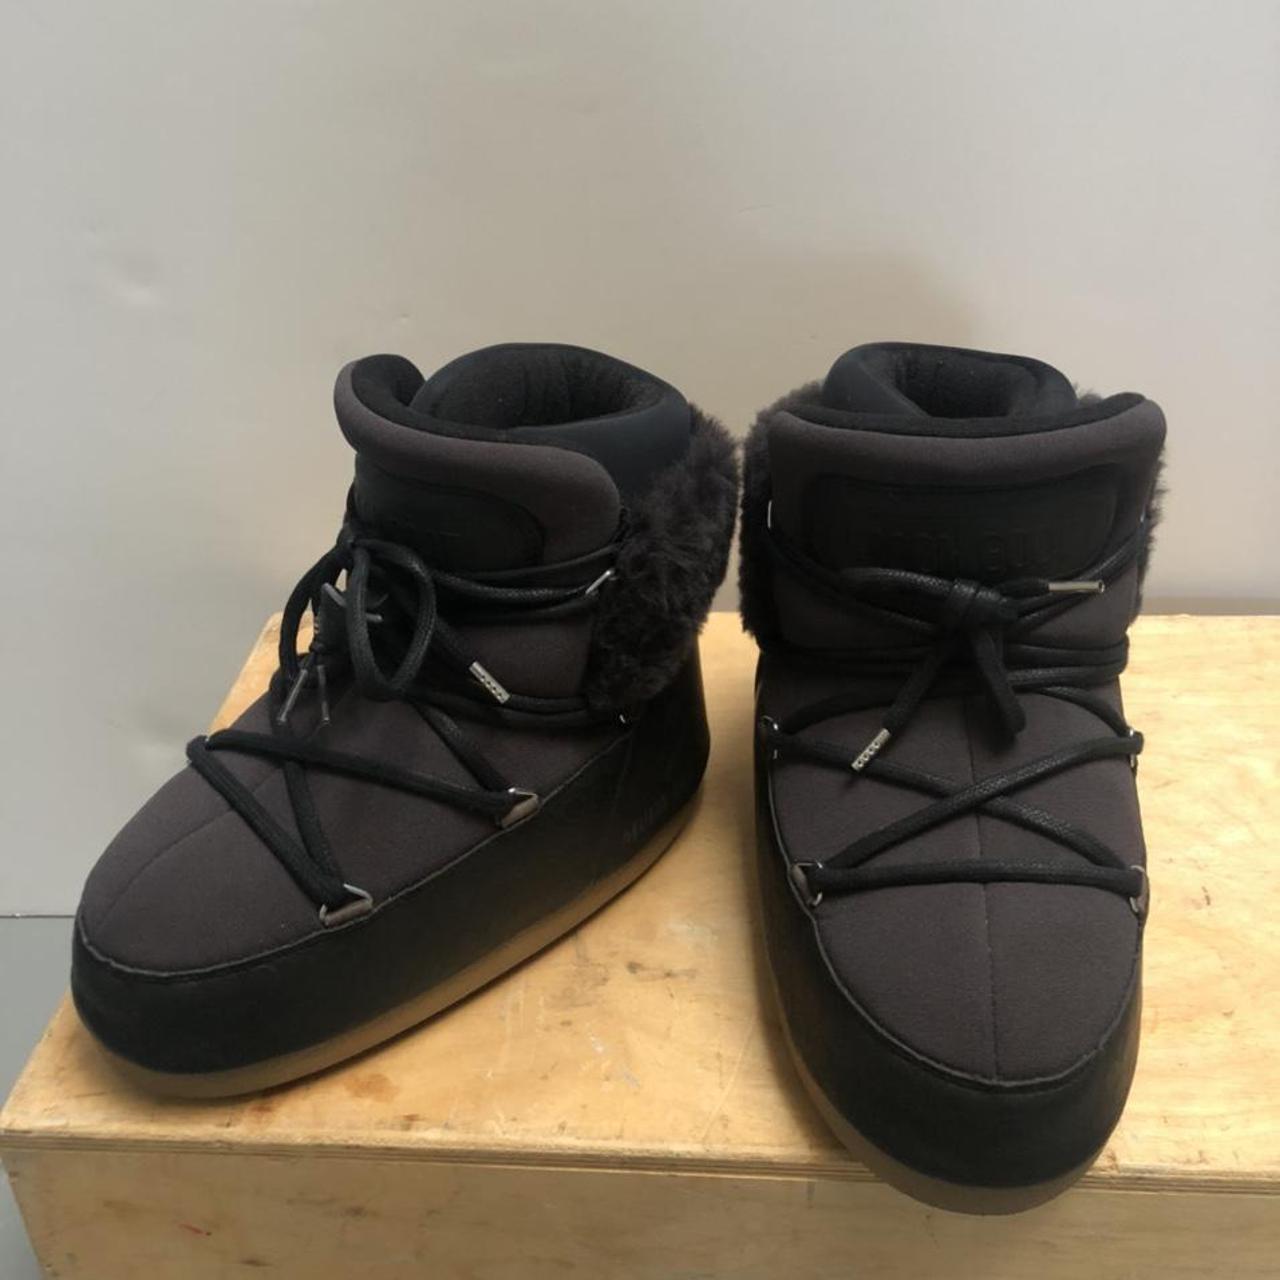 Technica original moon boots S1 135 in black and... - Depop